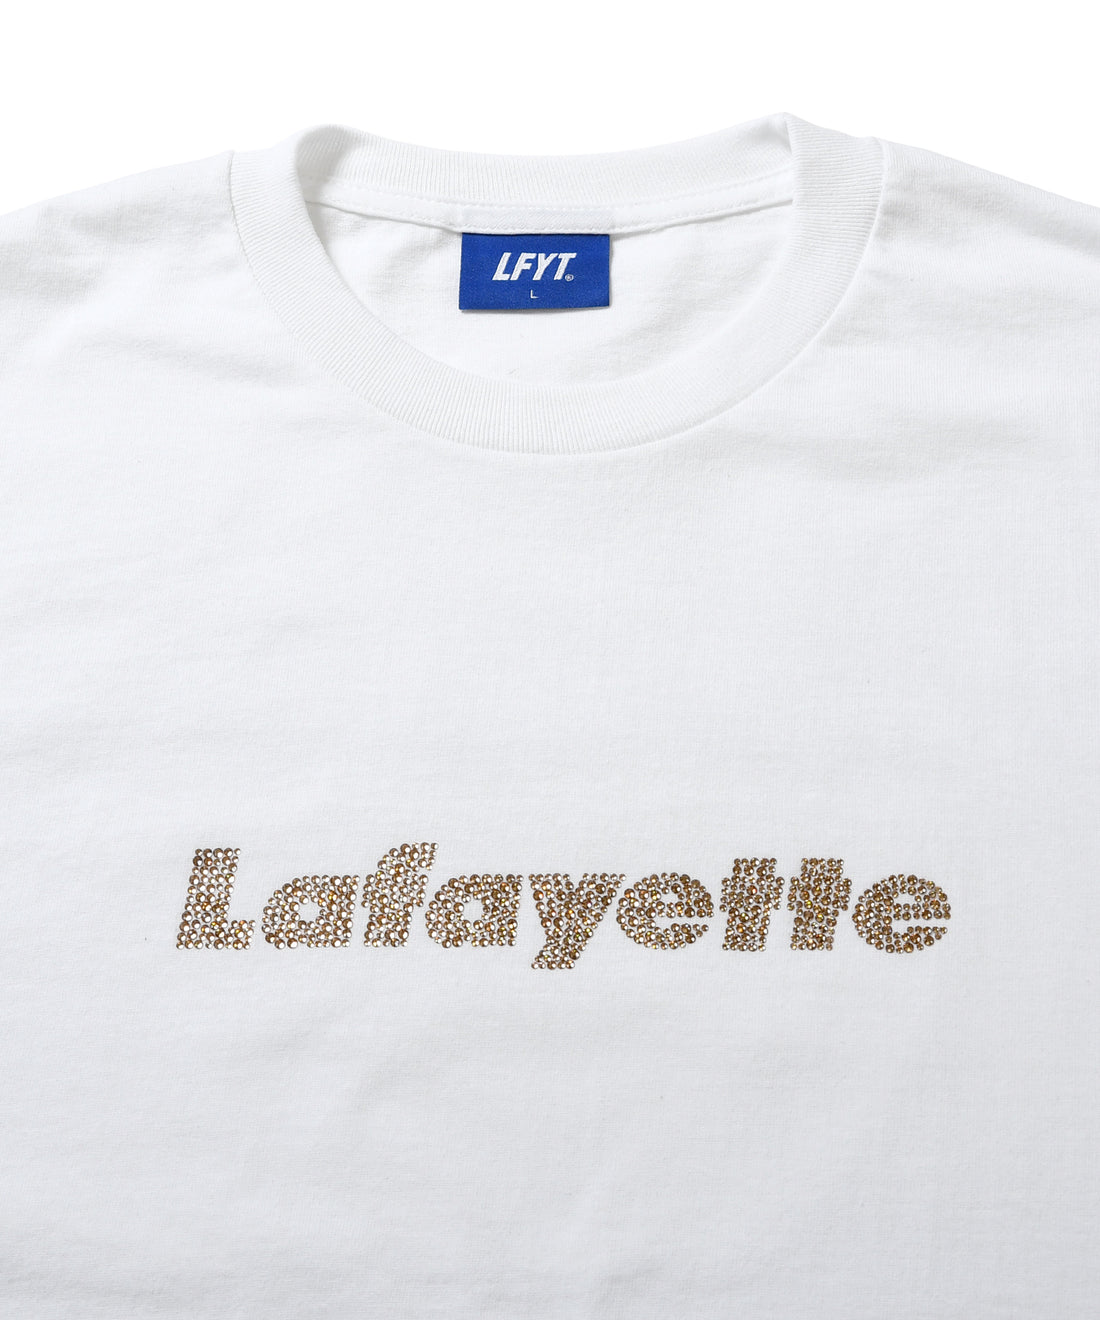 Lafayette Logo Rhinestone Tee